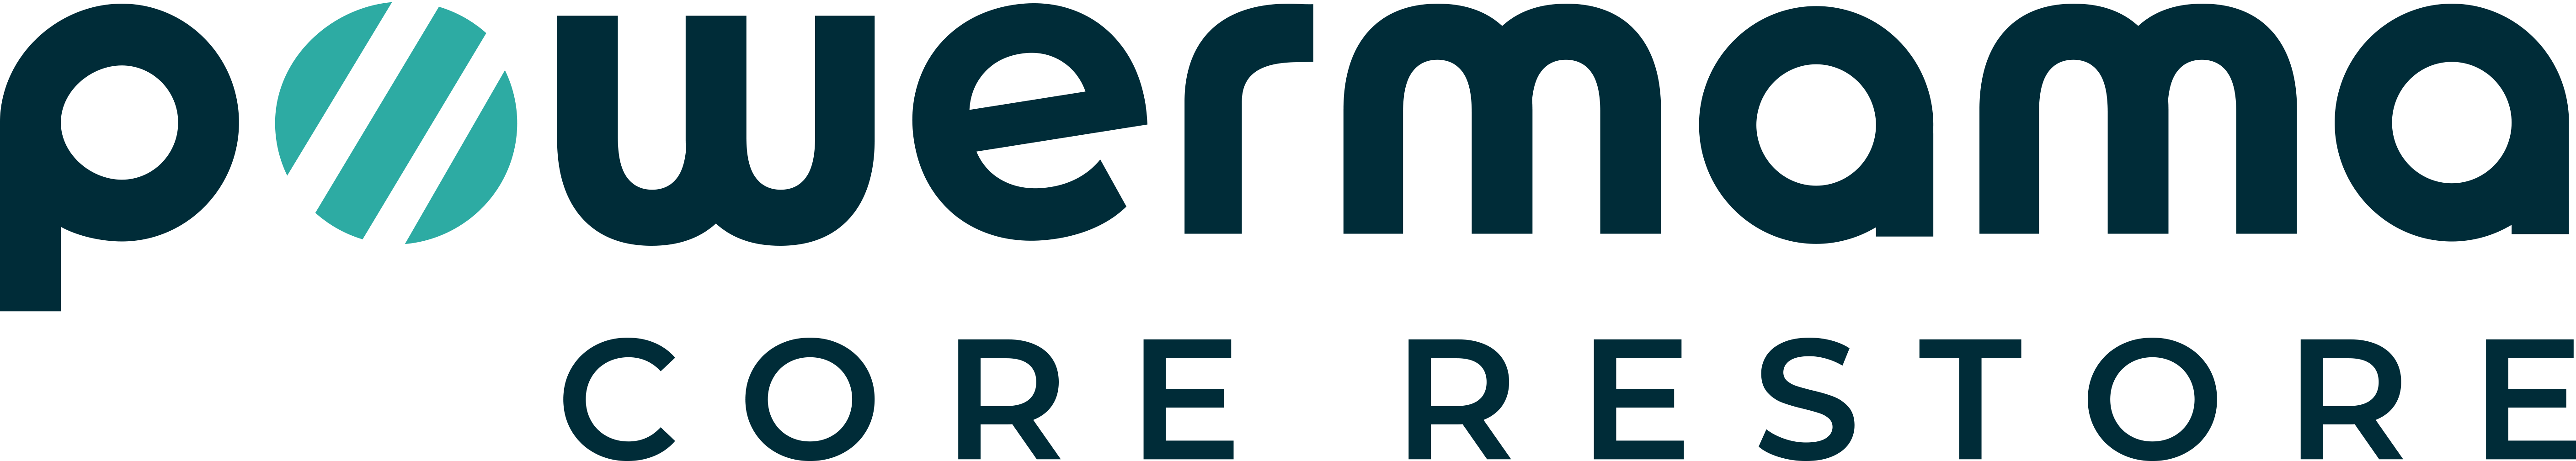 Powermama logo Core restore Blauw en groen